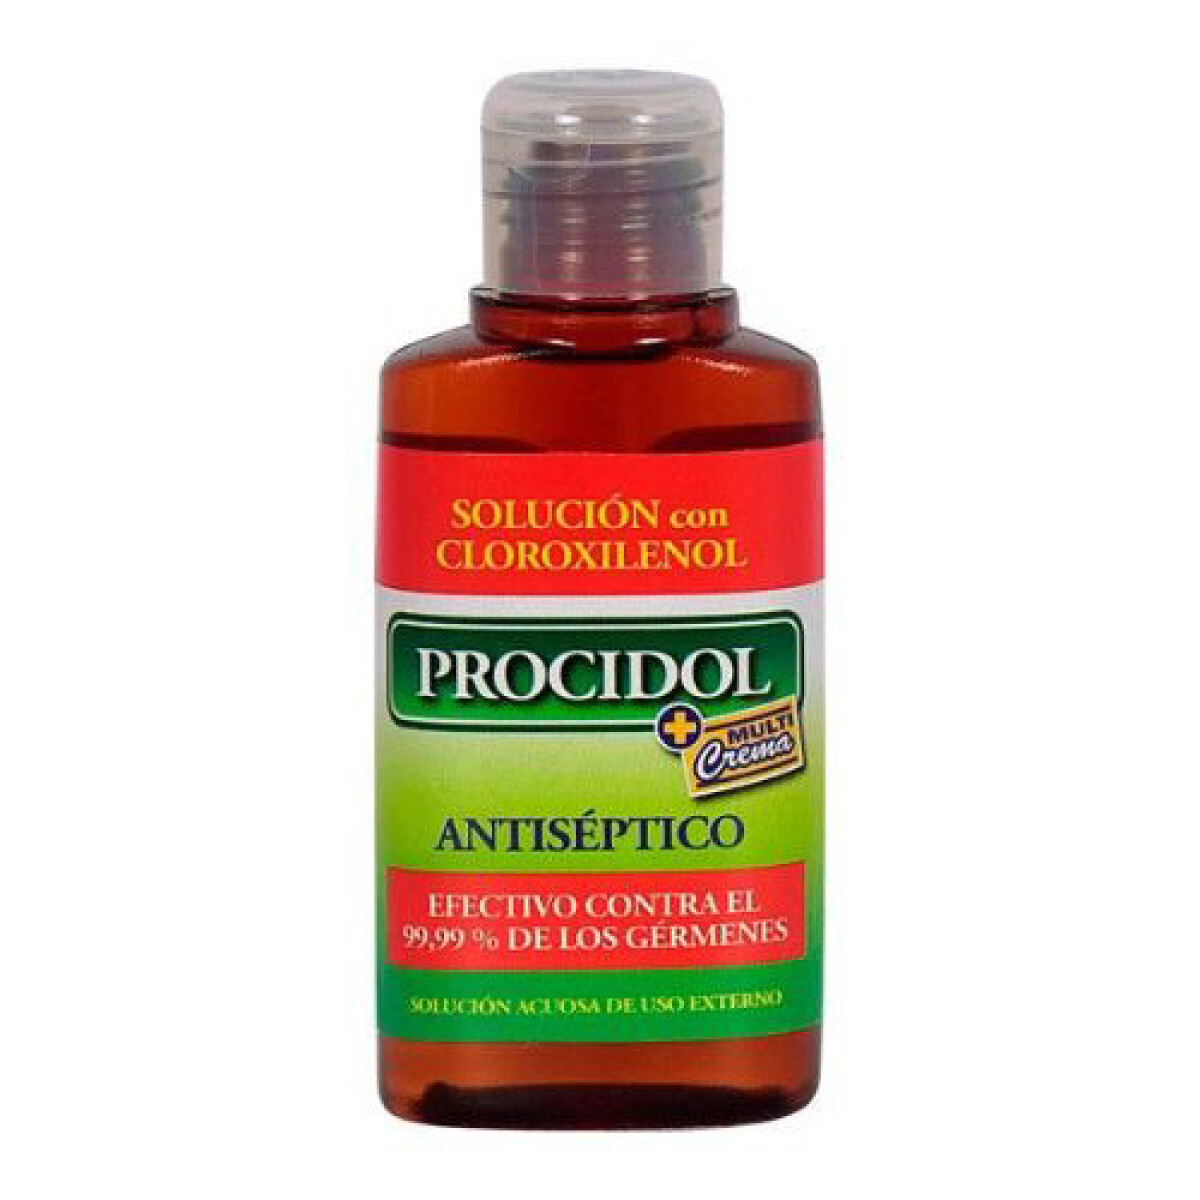 Procidol Antiseptico x 60 ML 